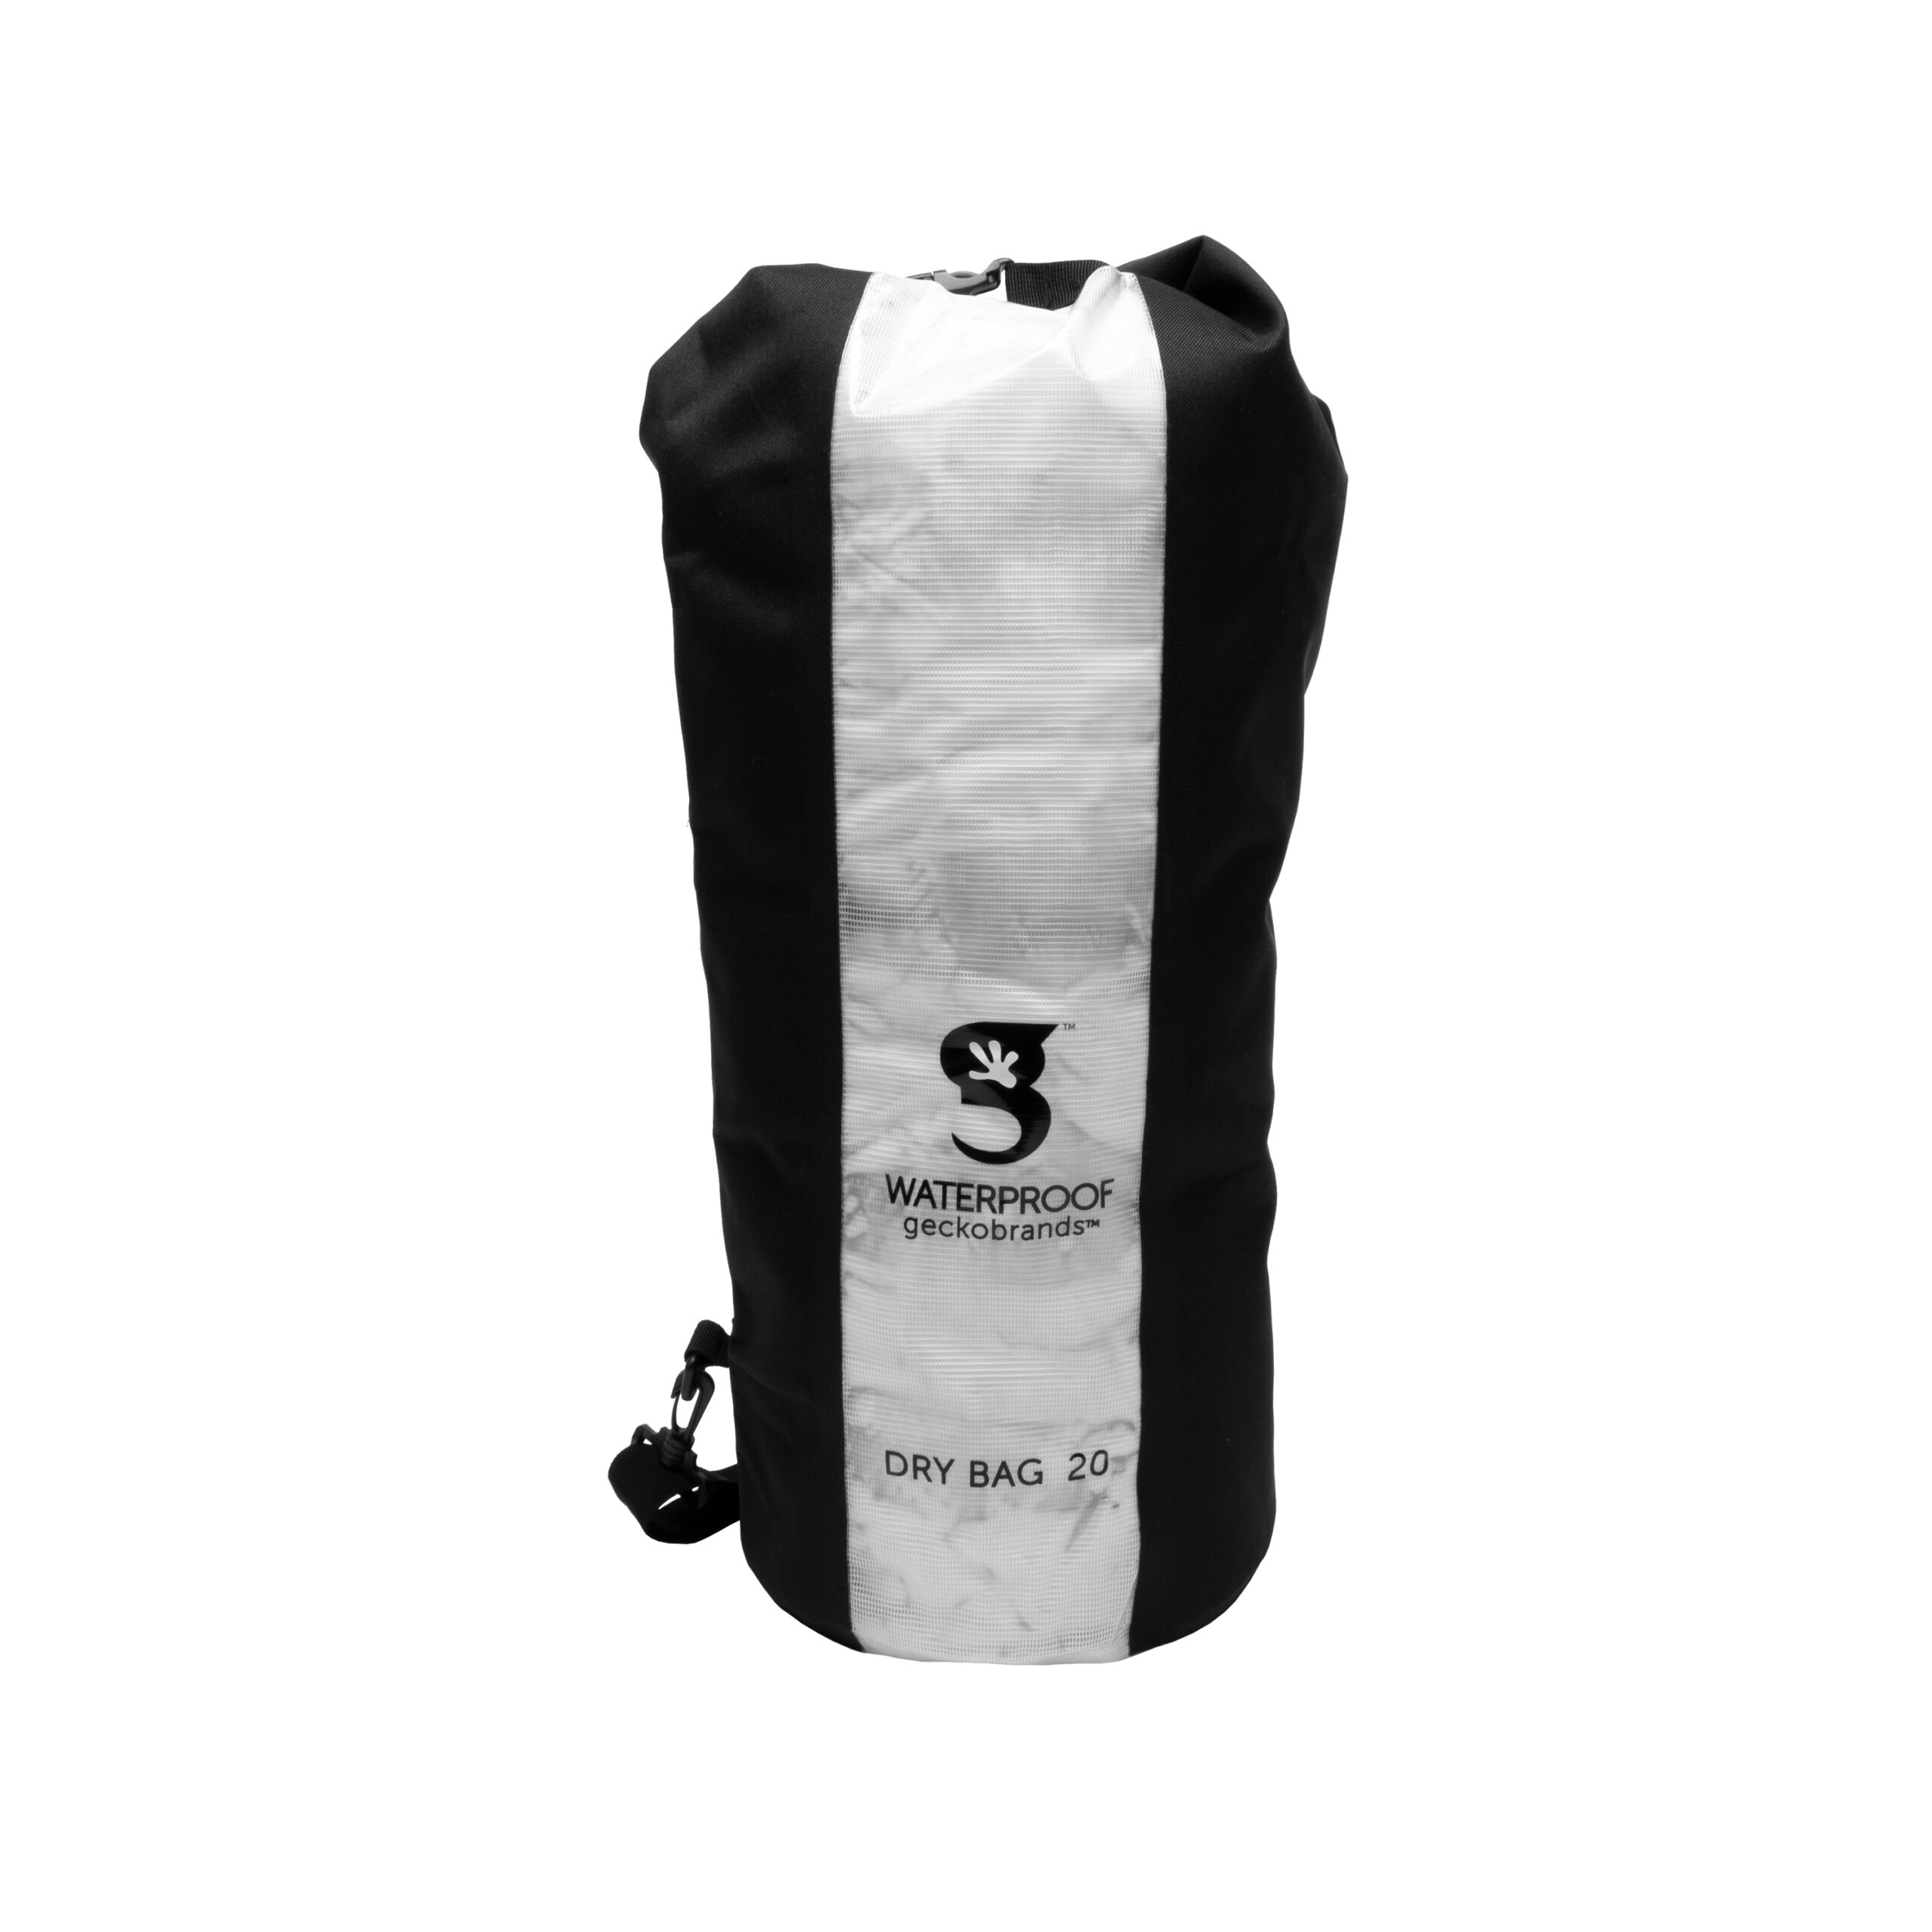 Durable View Waterproof Dry Bag 60L Geckobrands